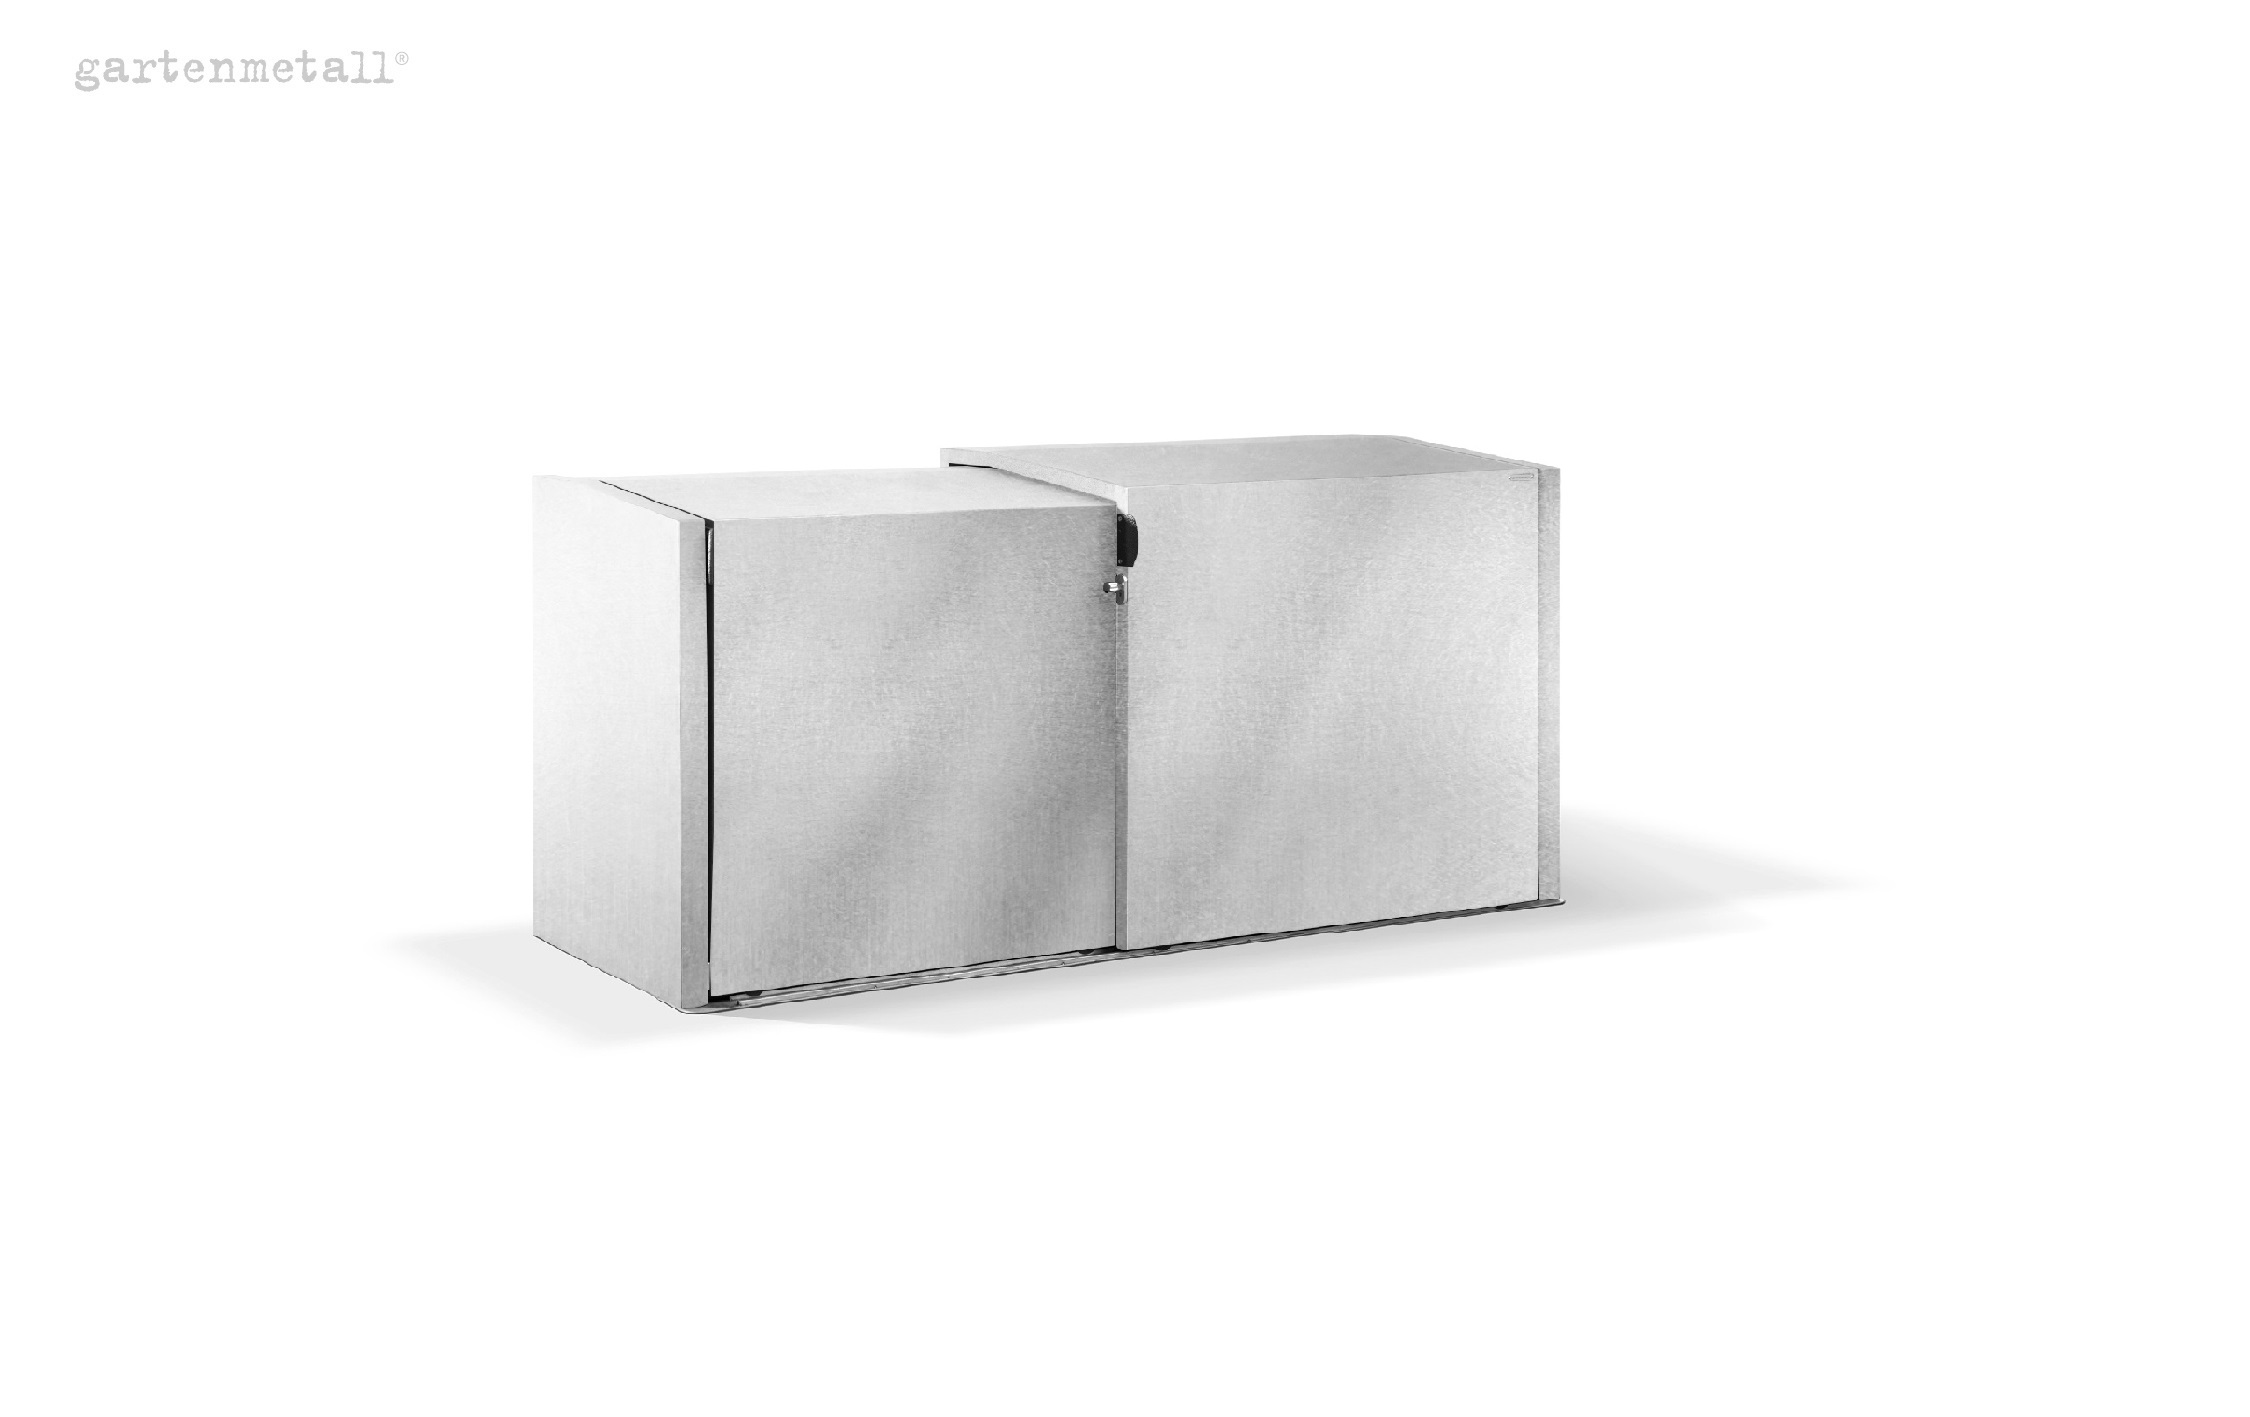 XANTEN bin box for 2 120 l bins with 2 sliding doors